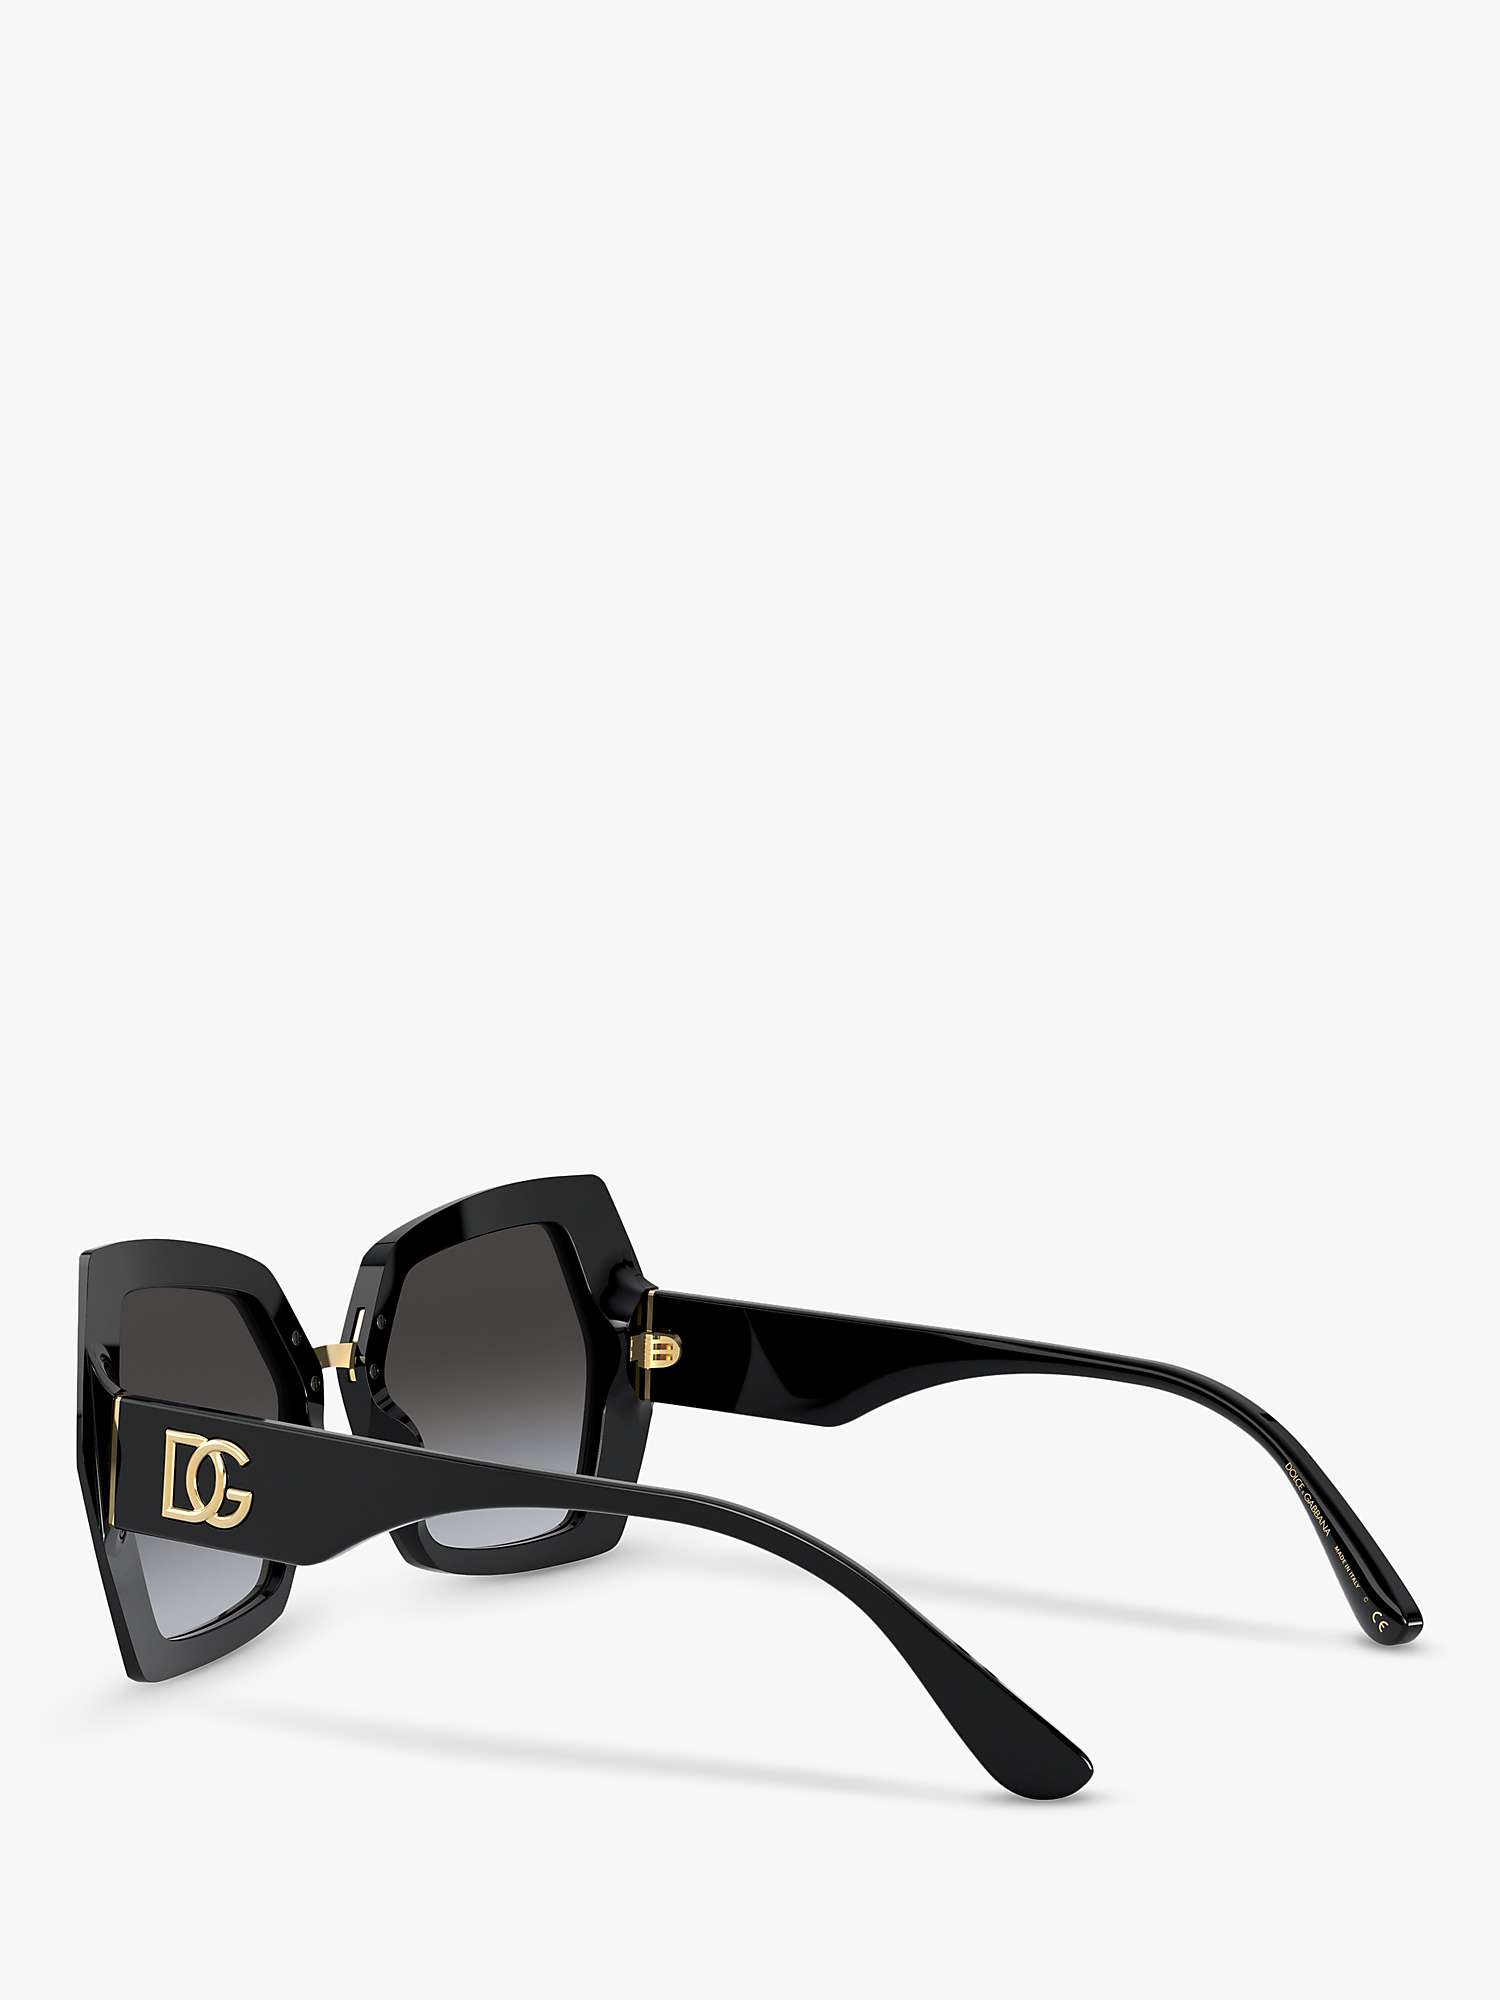 Buy Dolce & Gabbana DG4377 Women's Chunky Hexagonal Cat's Eye Sunglasses, Black/Grey Gradient Online at johnlewis.com